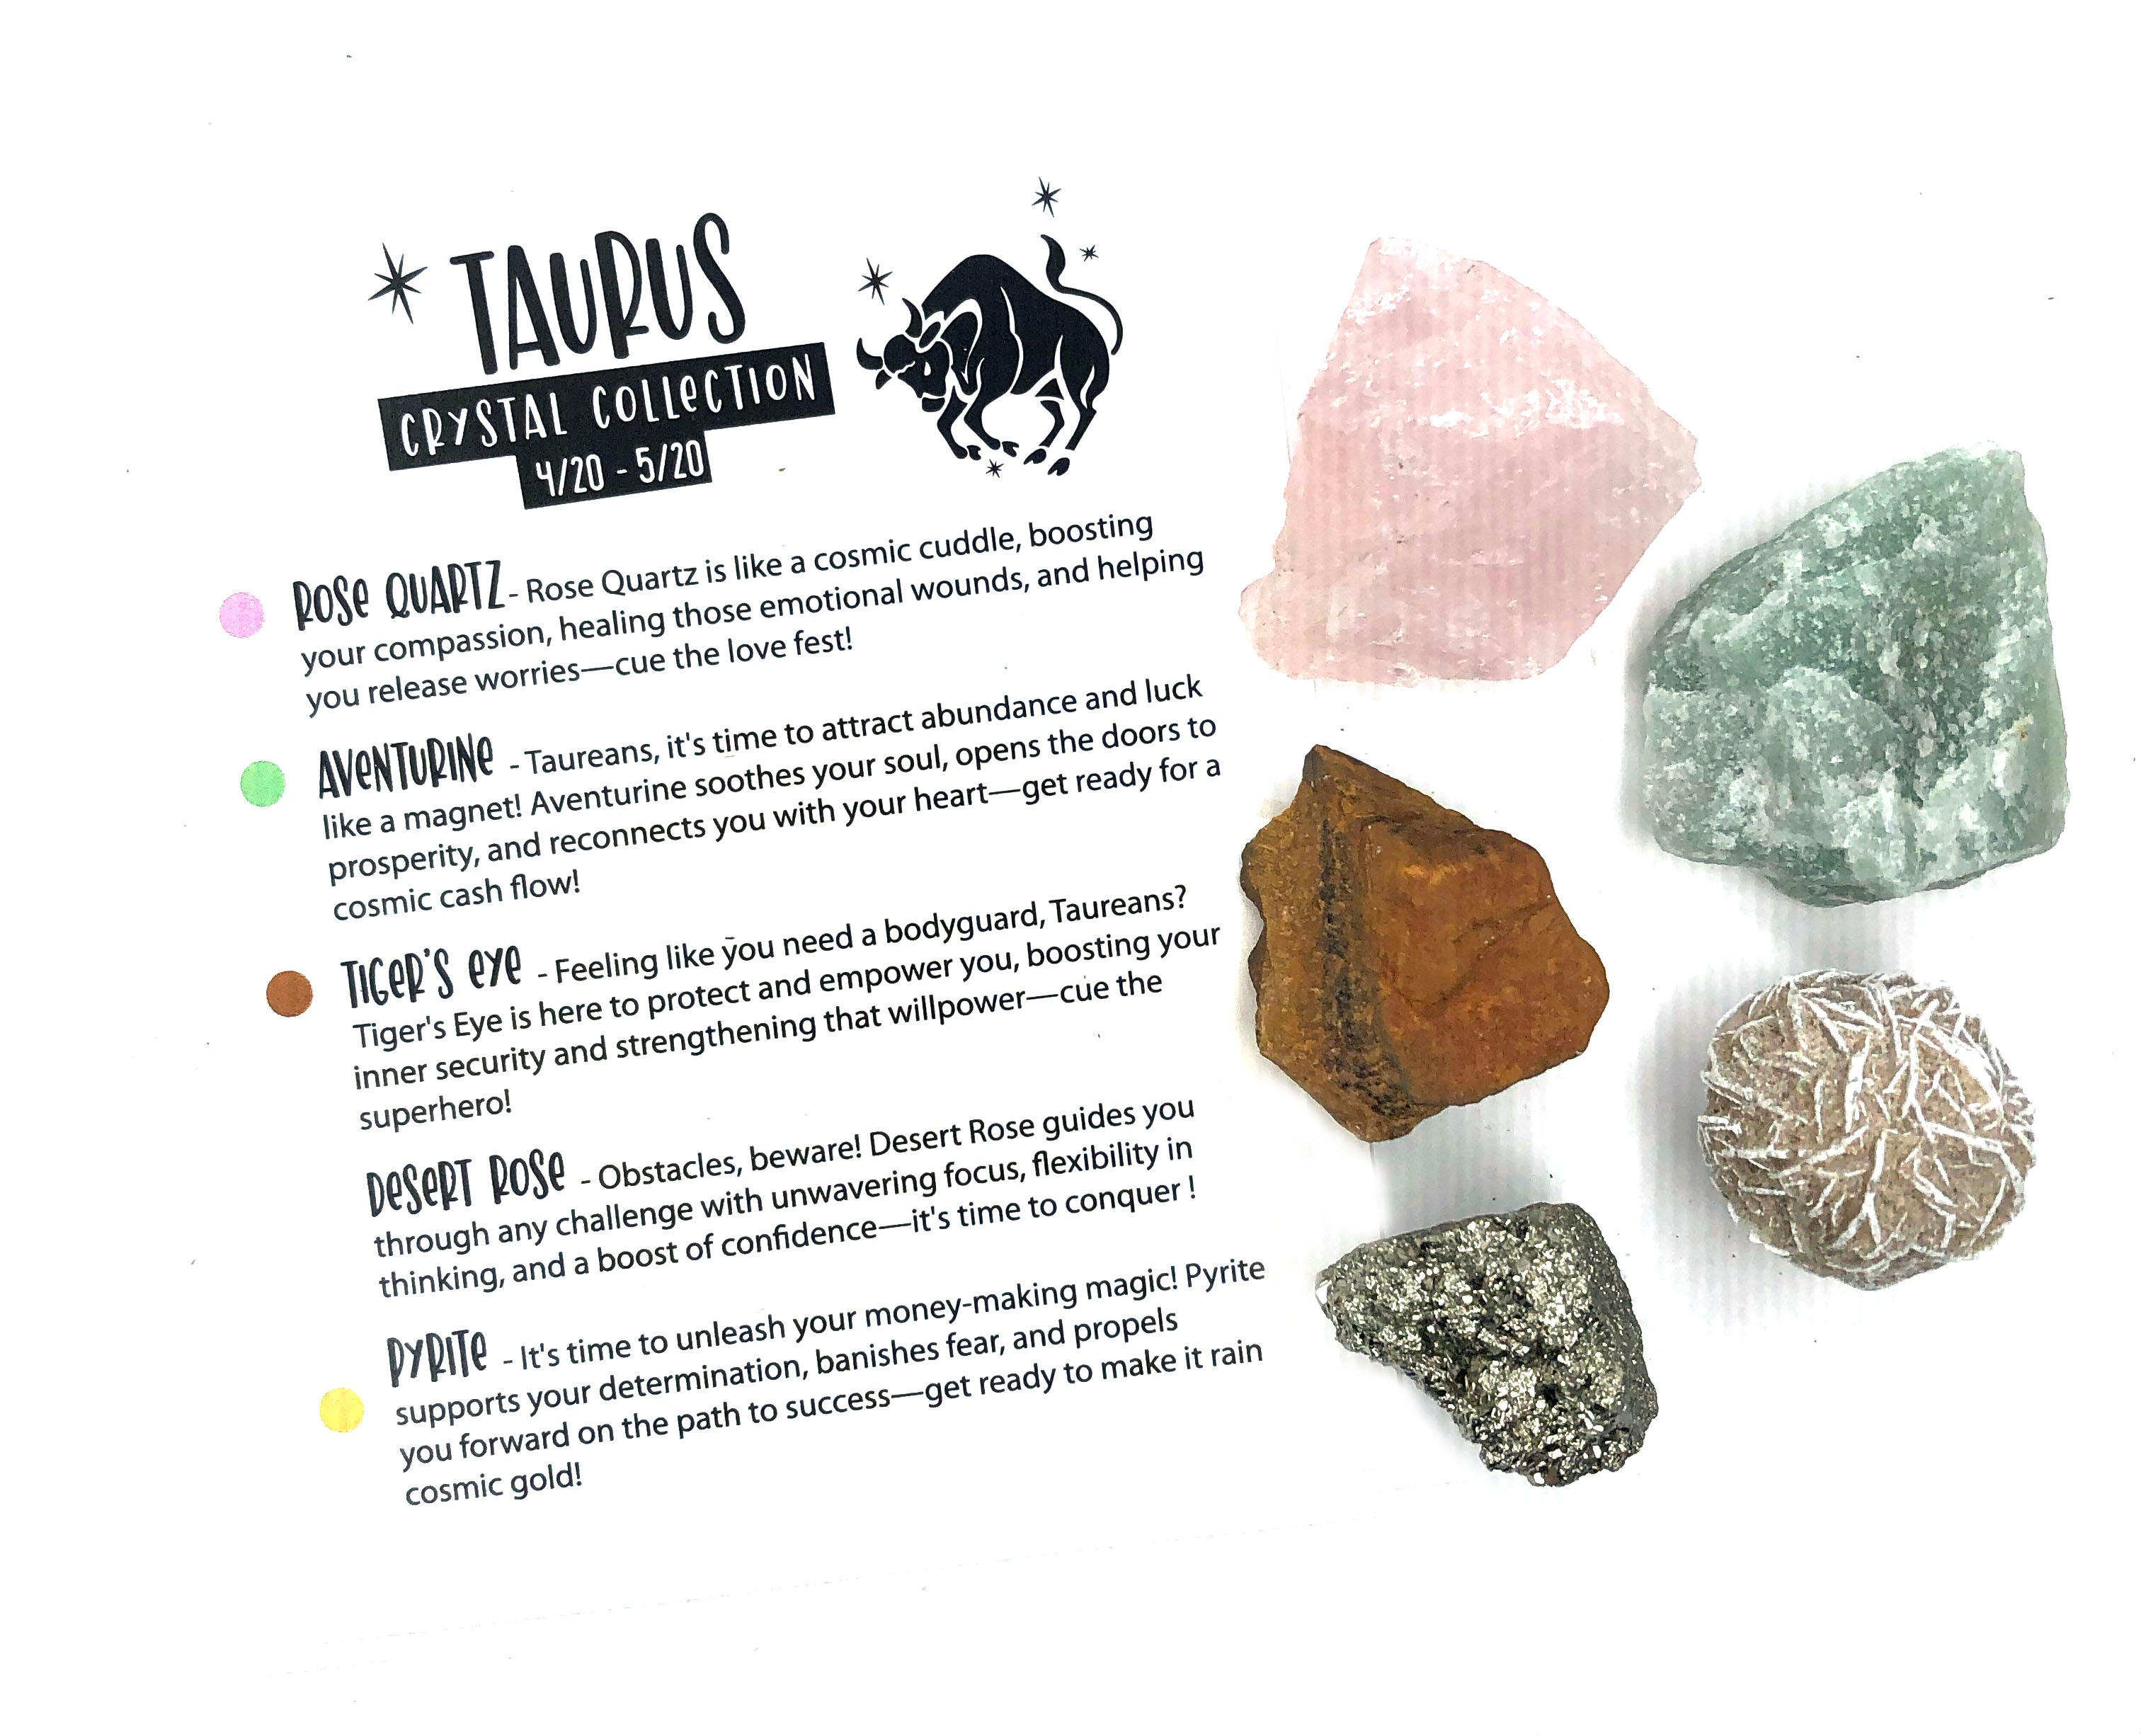 TAURUS Crystal Collection